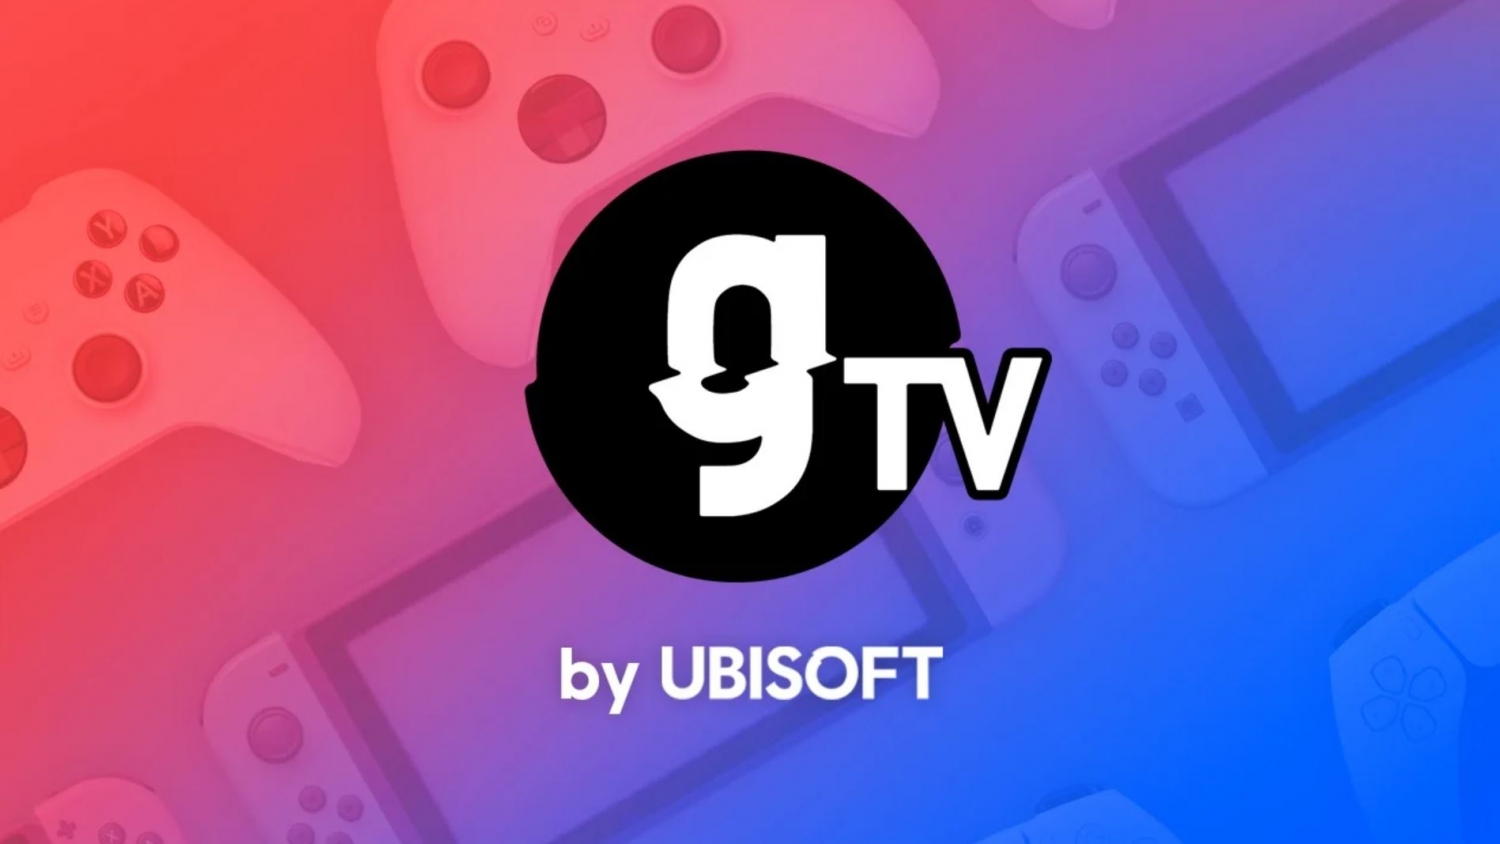 GTV logo. Channel call